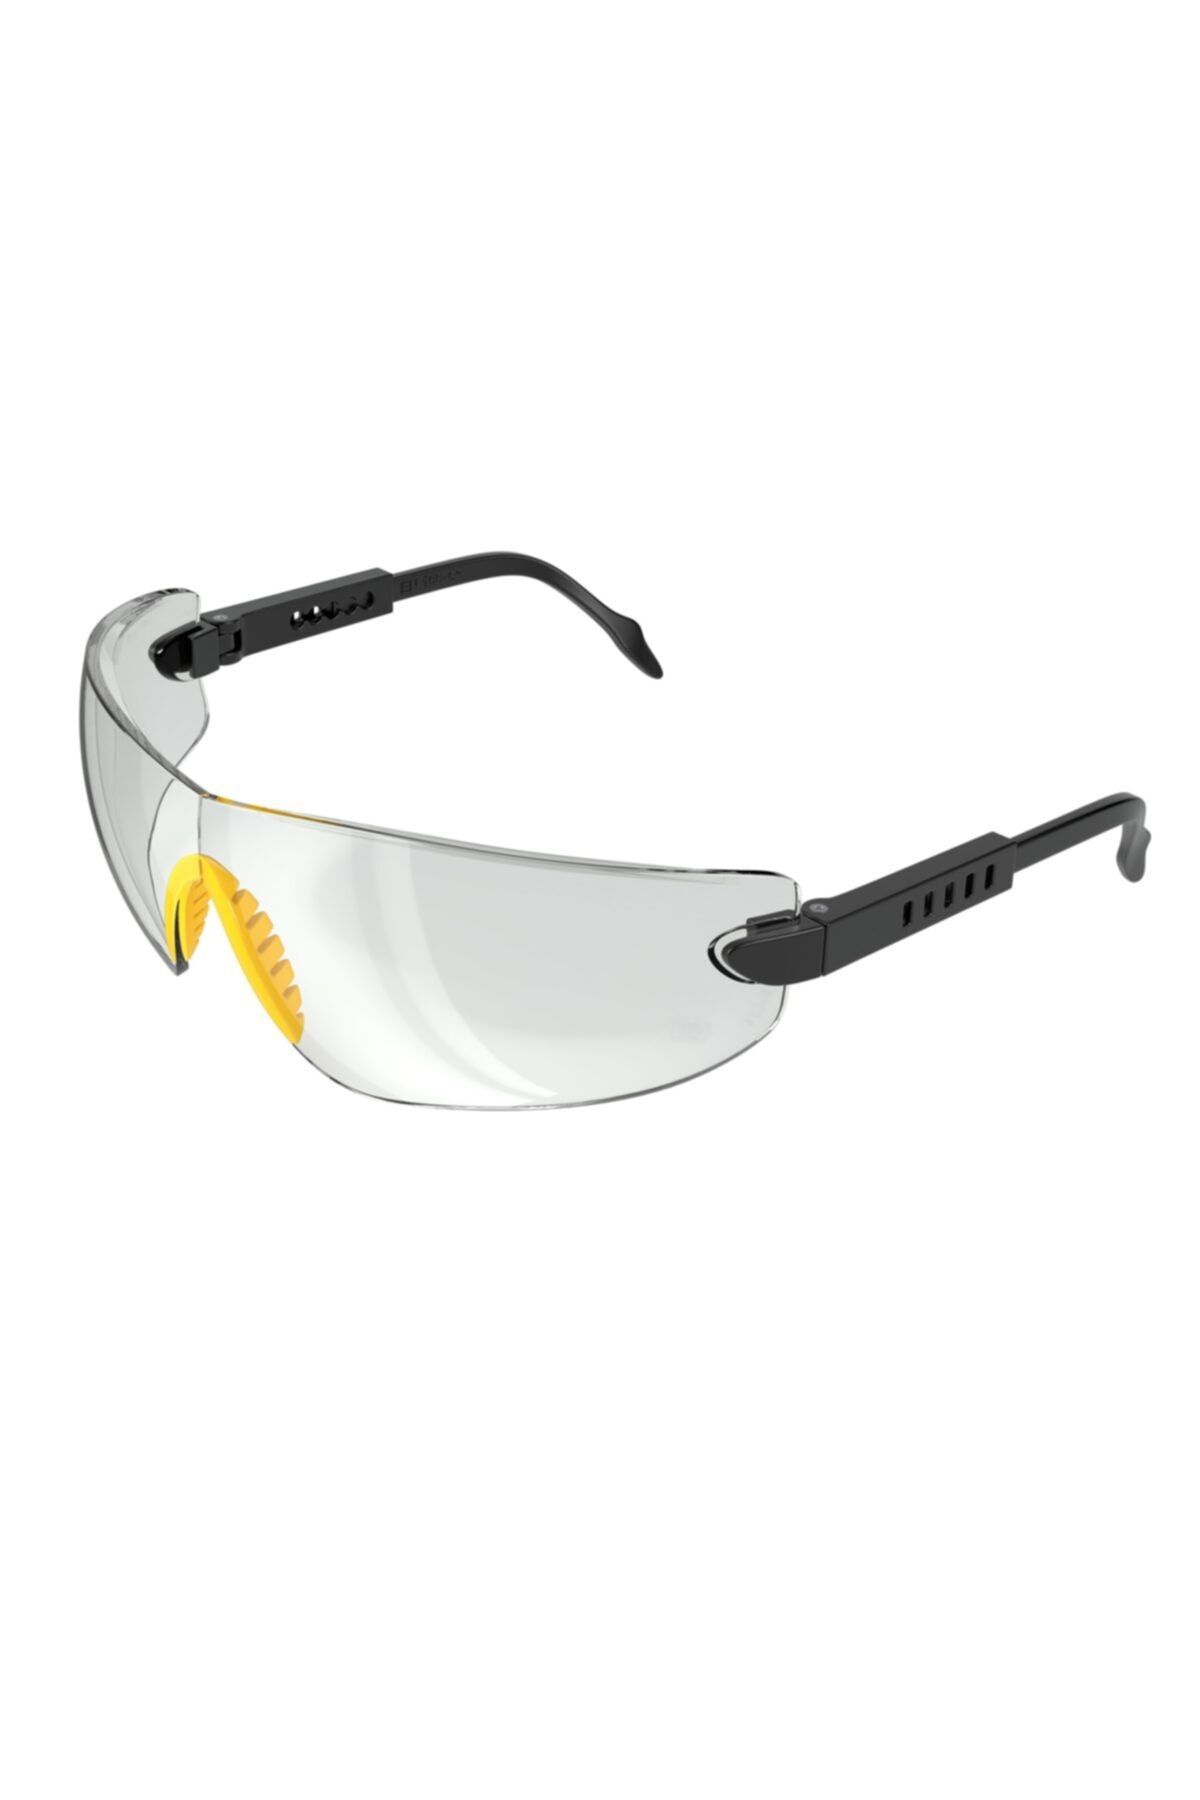 Baymax S300 İş Gözlüğü Şeffaf 12 Adet